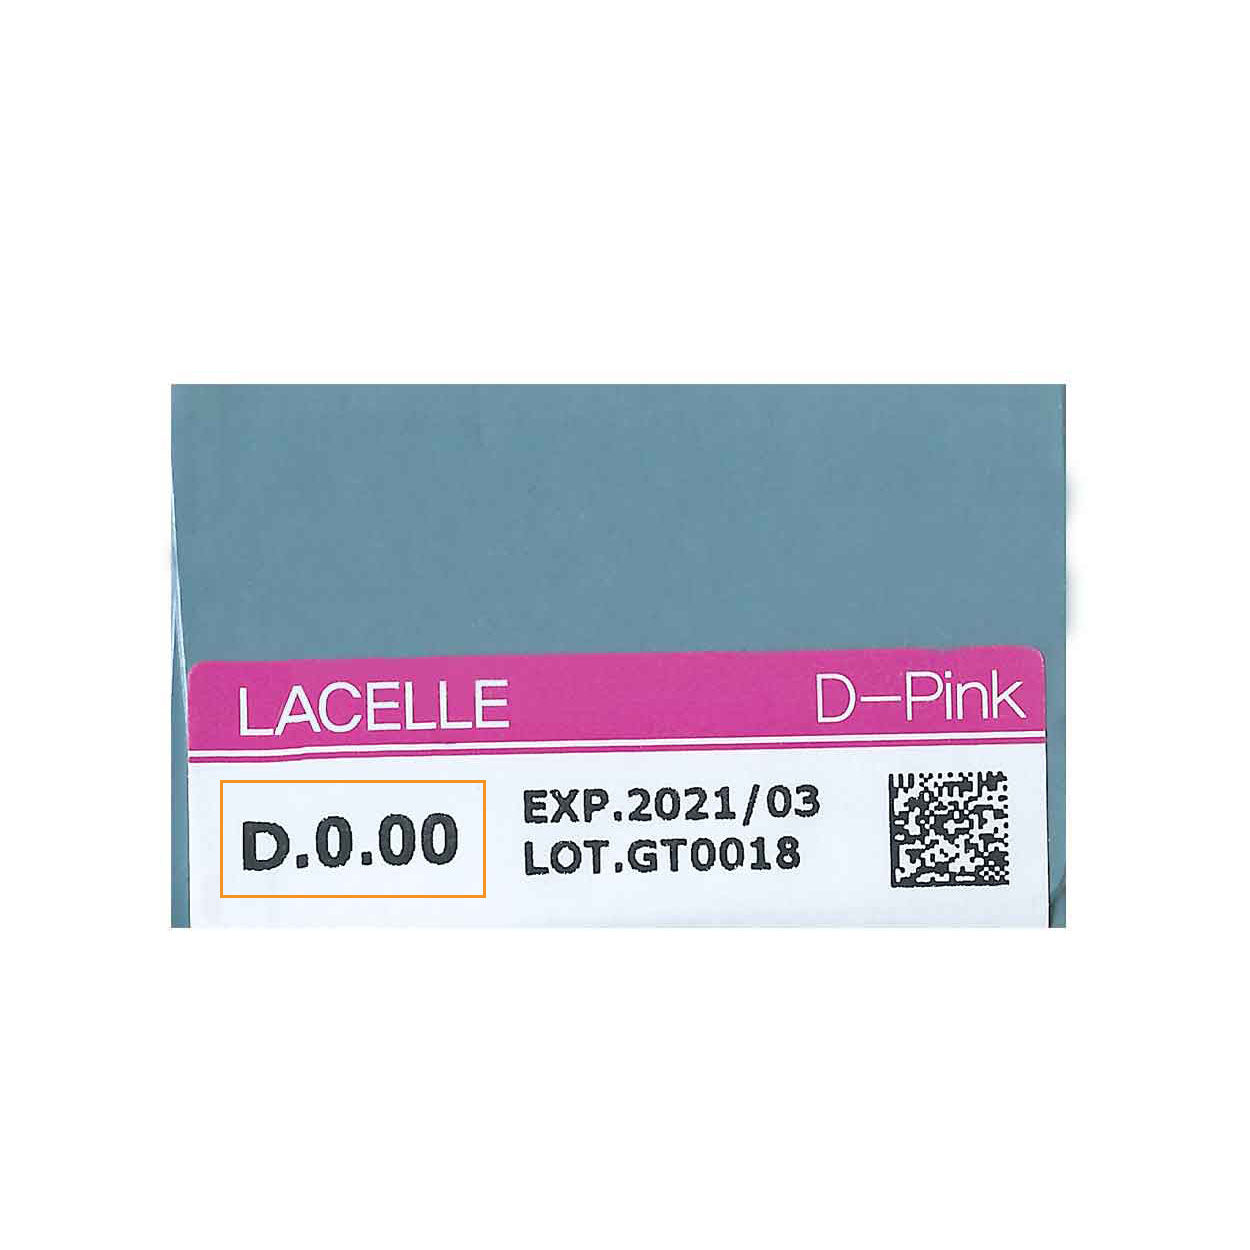 B&L Lacelle Diamond Daily Disposable Color Contact Lenses